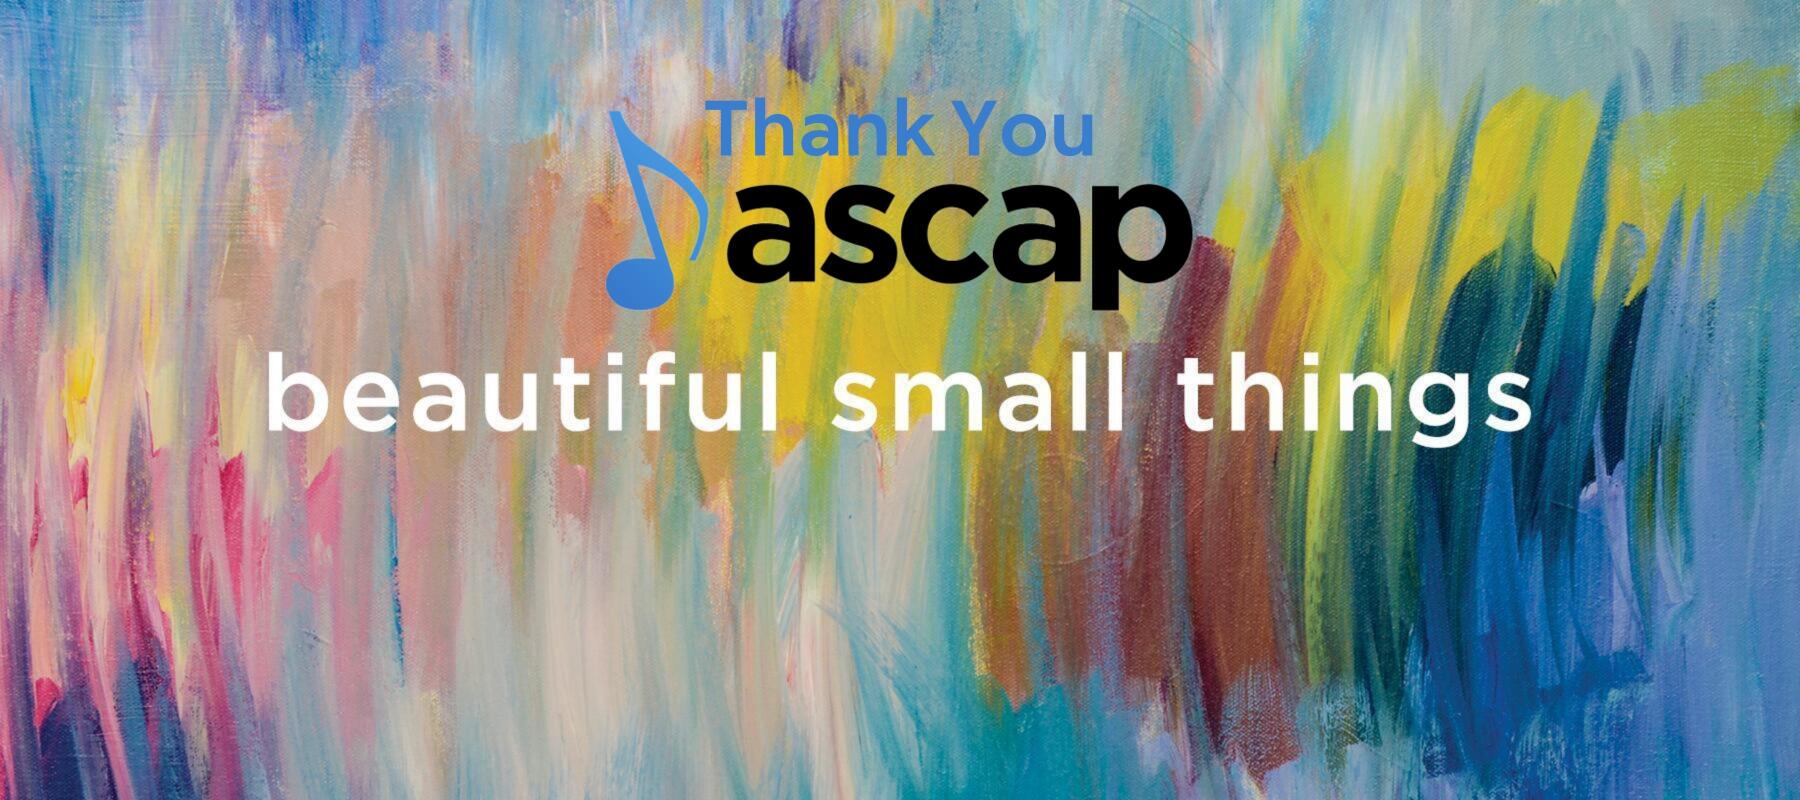 Thank you ASCAP!